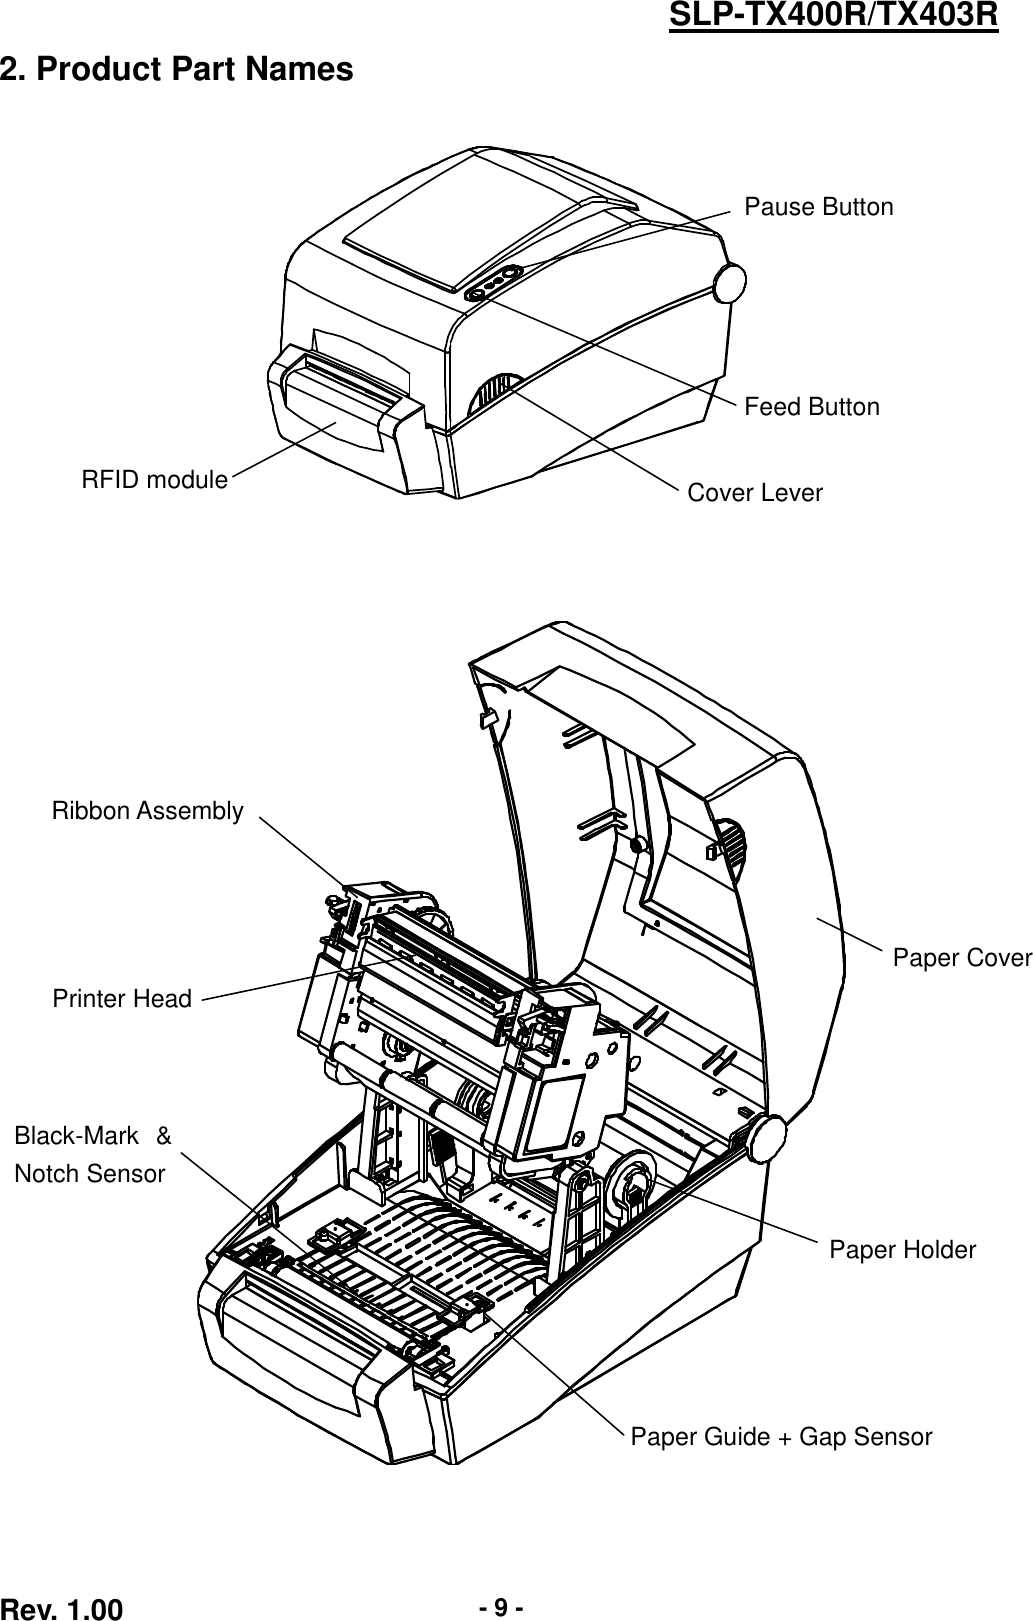  Rev. 1.00 - 9 - SLP-TX400R/TX403R 2. Product Part Names              Feed Button RFID module  Cover Lever Printer Head Paper Holder Paper Guide + Gap Sensor Black-Mark  &amp; Notch Sensor  Pause Button Paper Cover Ribbon Assembly 